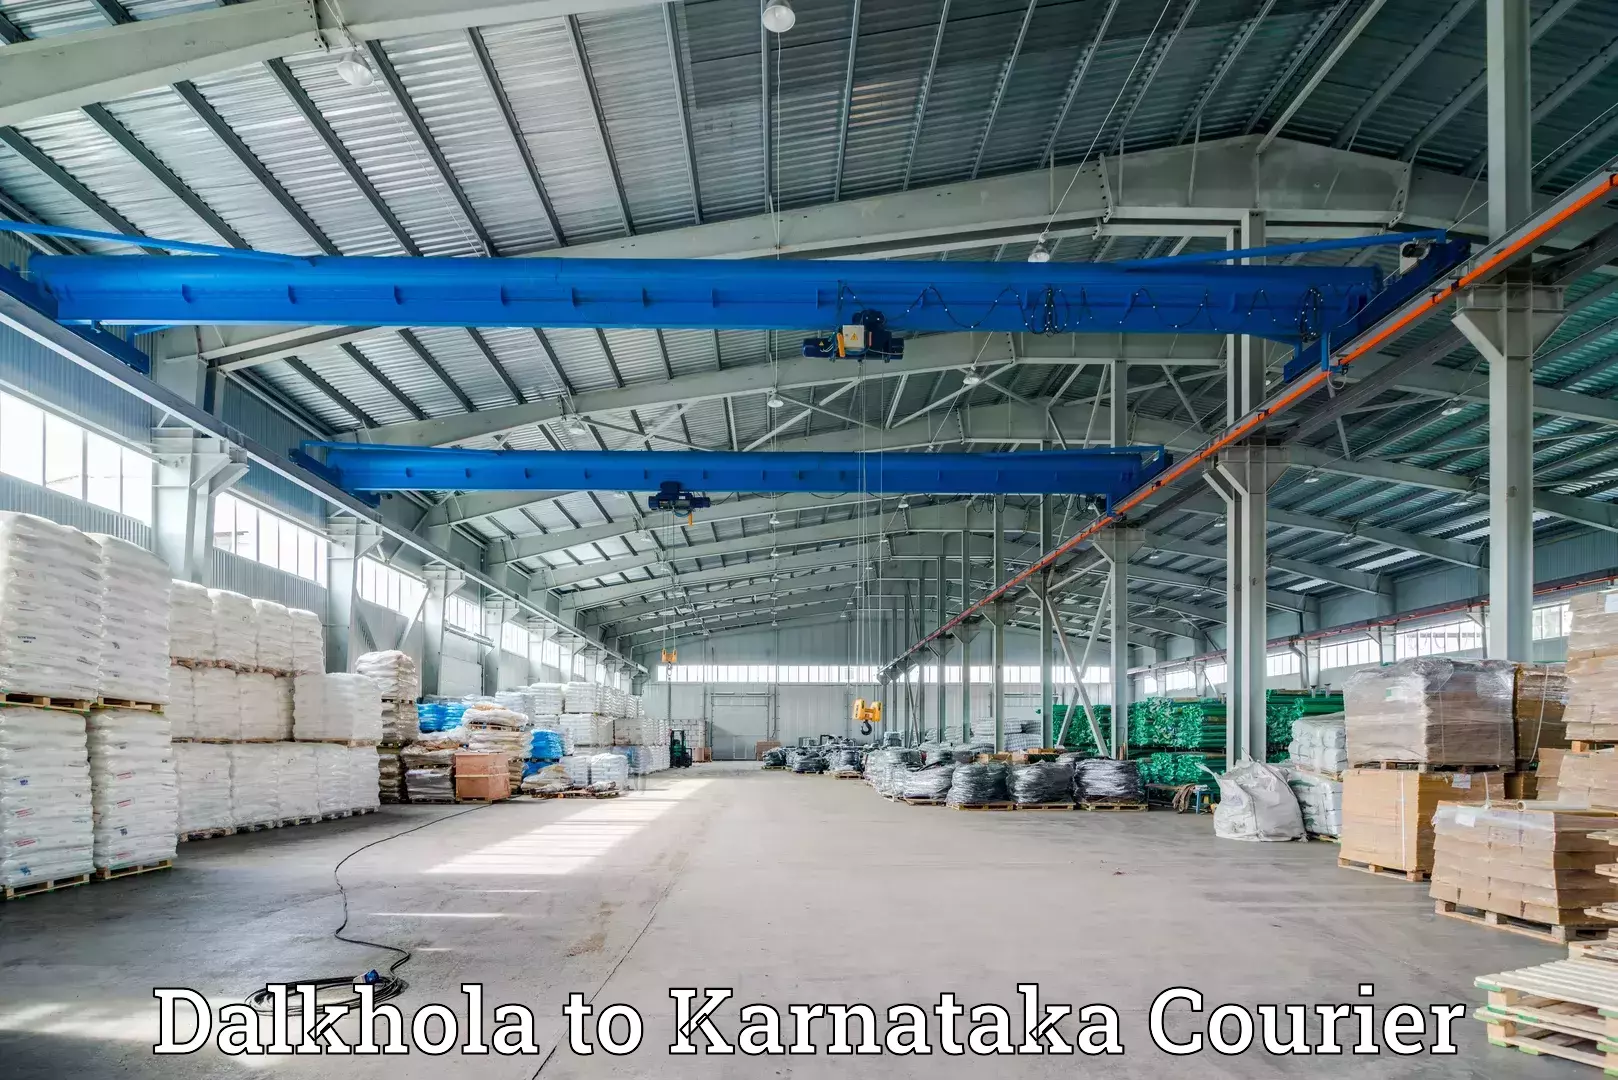 Courier service innovation Dalkhola to Karnataka